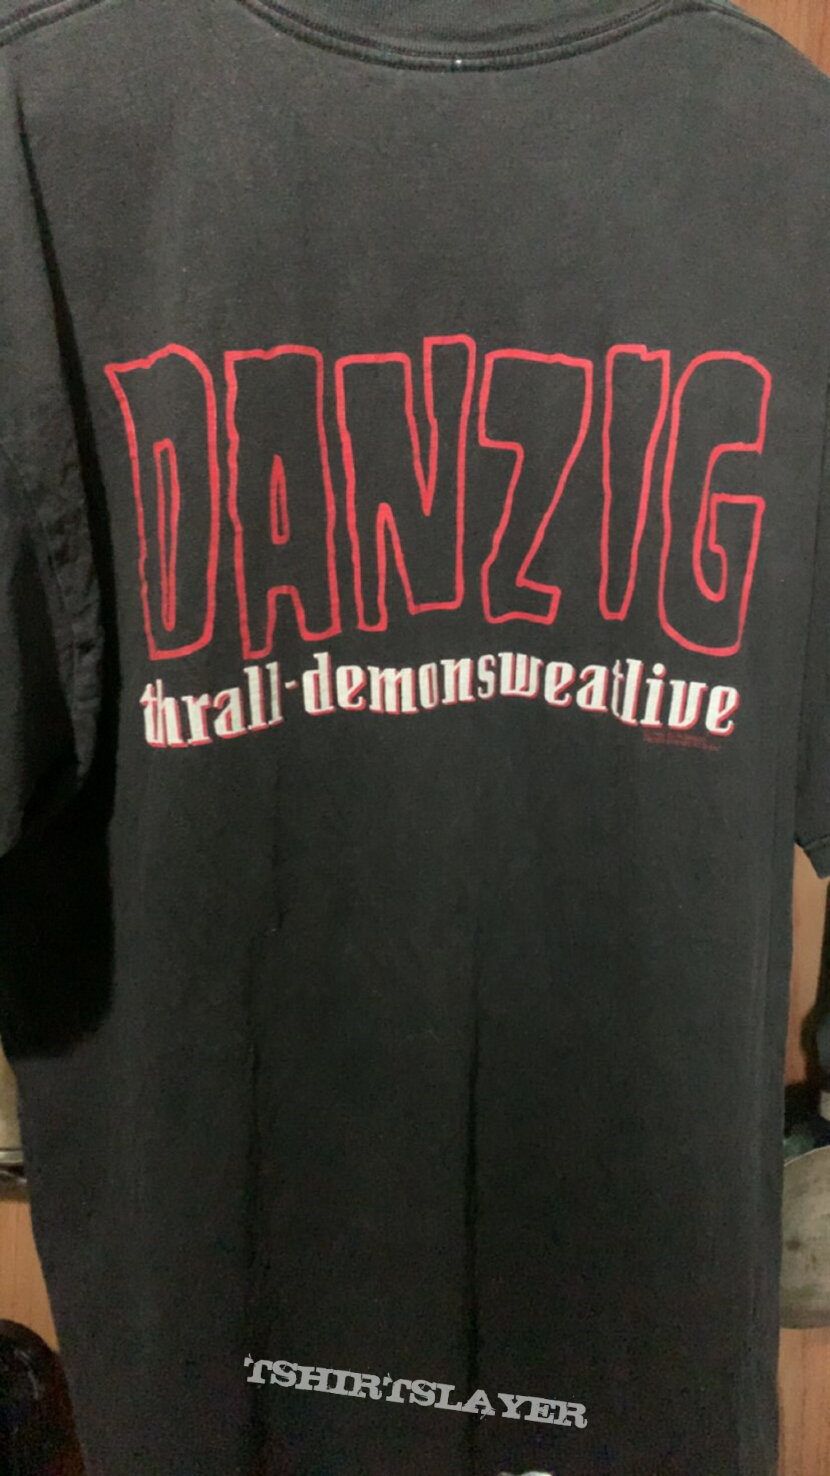 1993 Danzig “Thrall-DemonSweatLive” Shirt